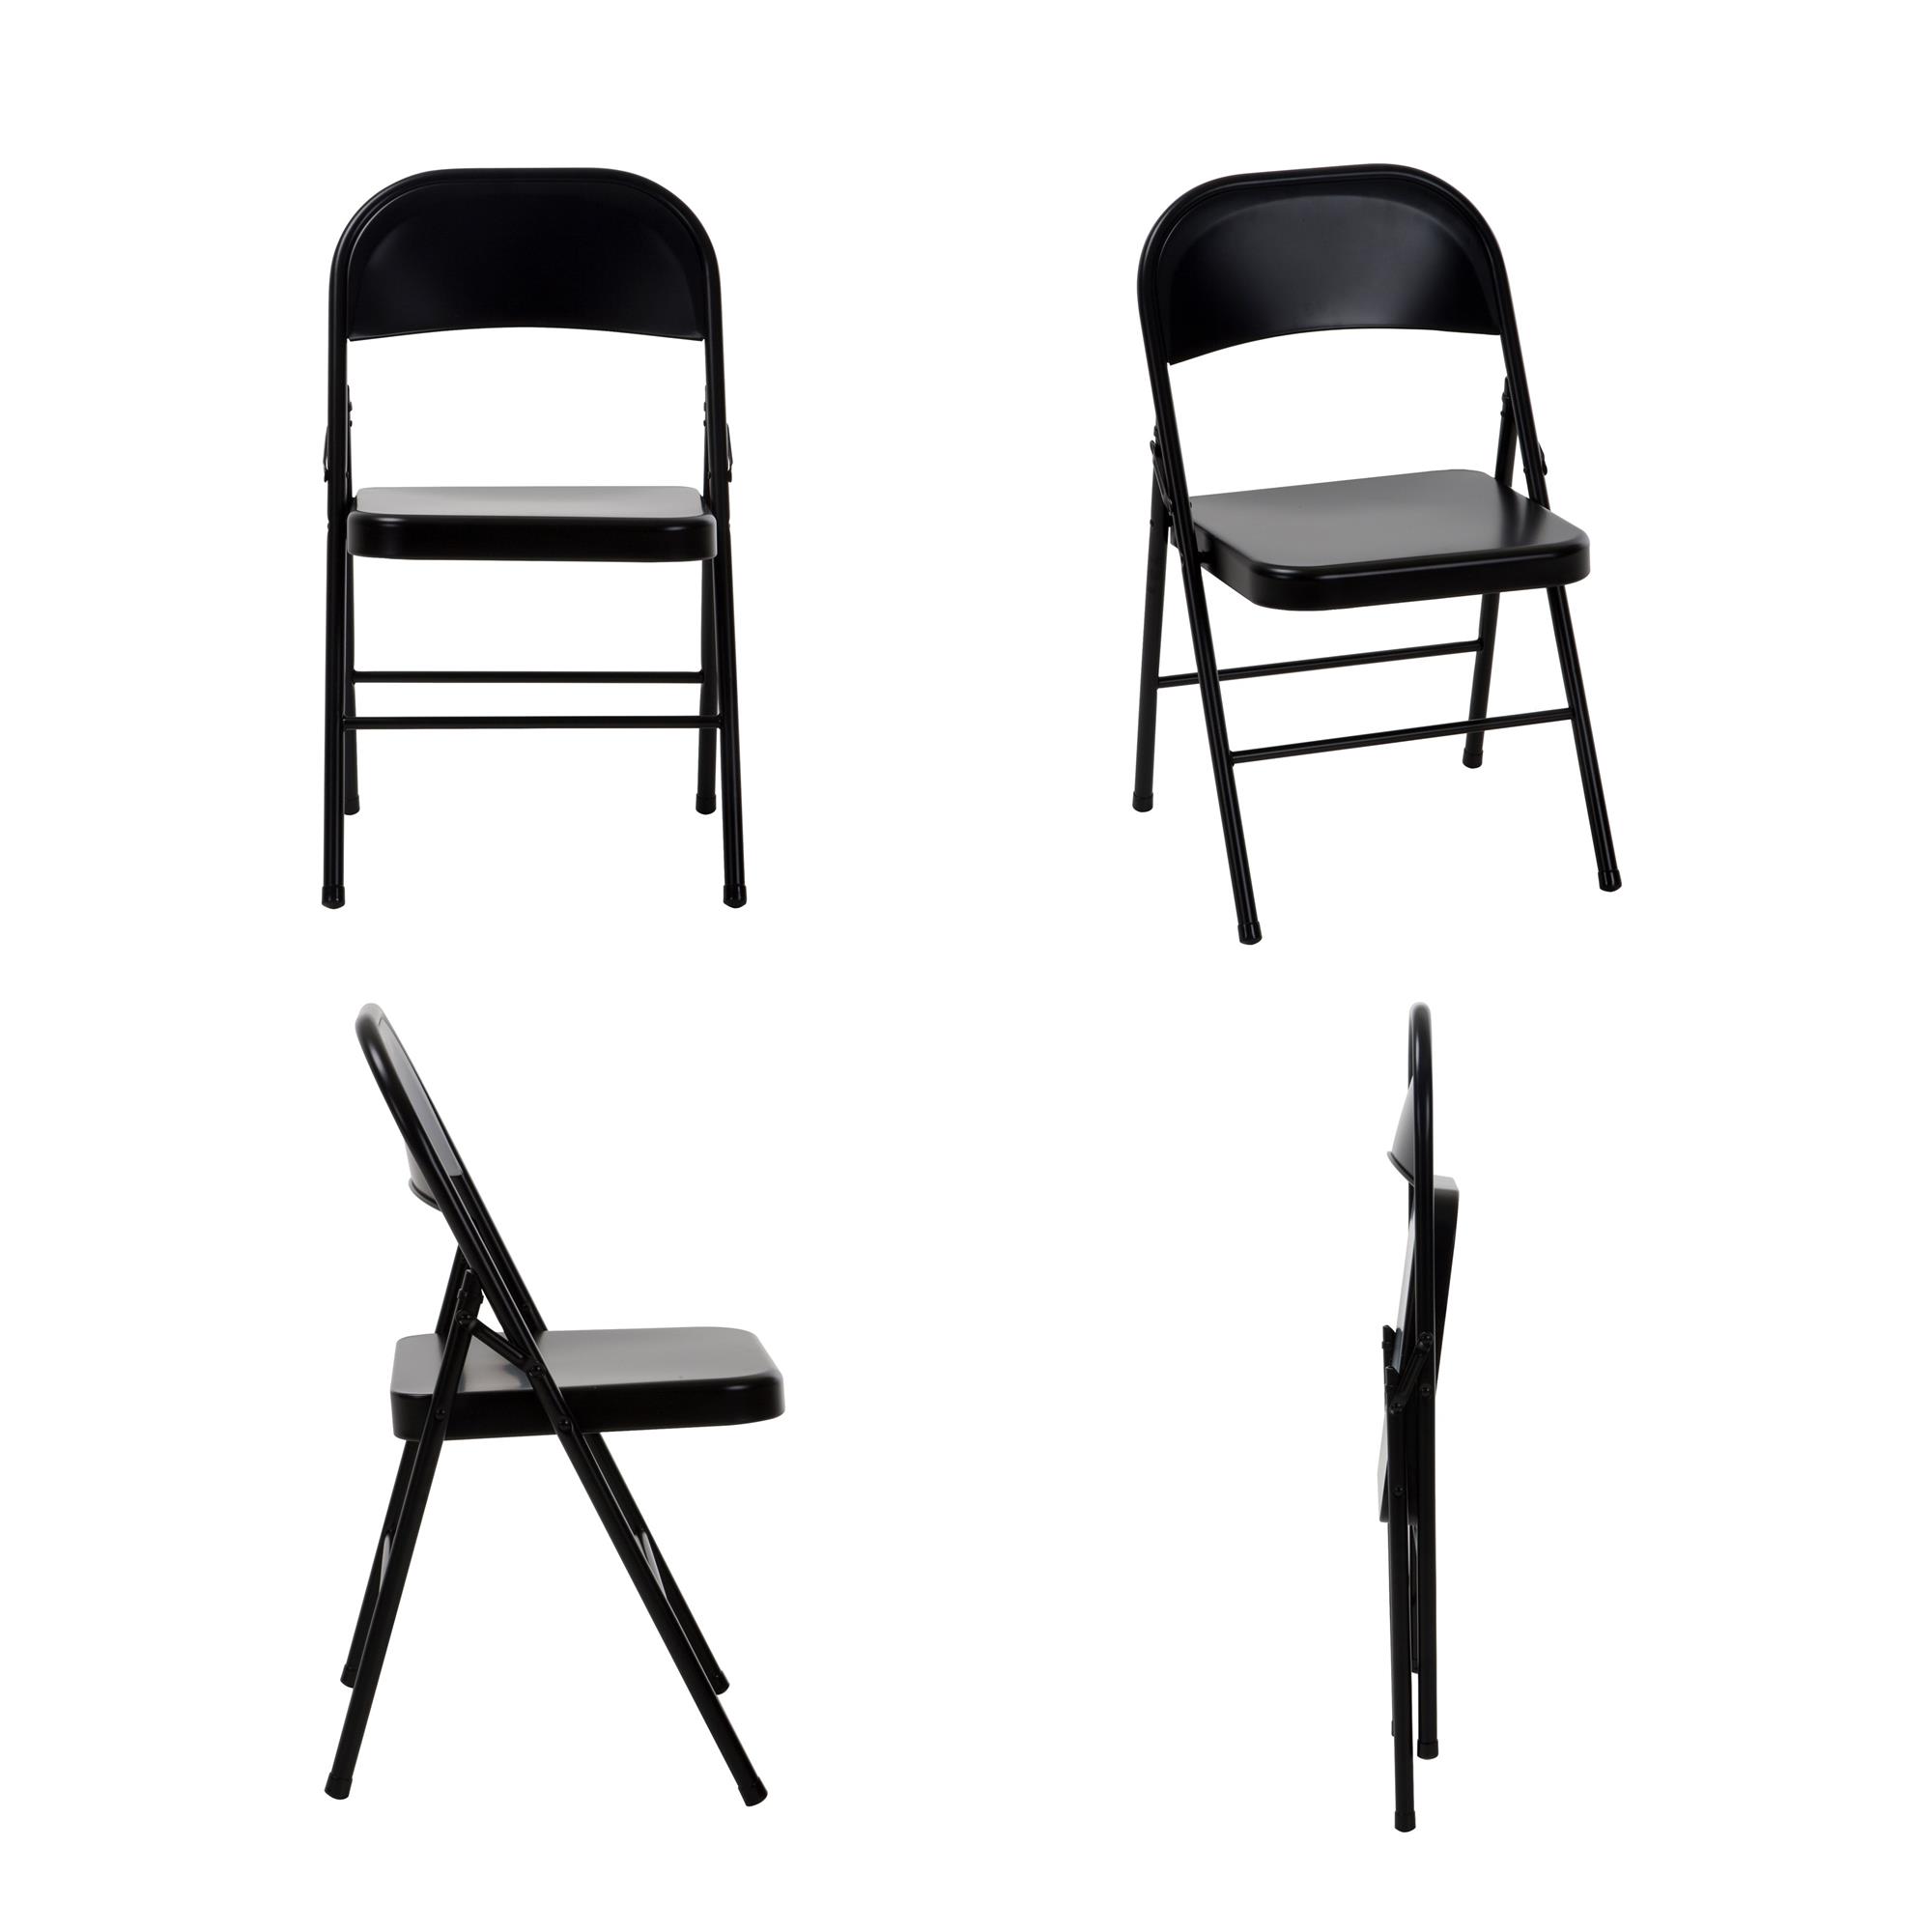 Mainstays Steel Folding Chair (4 Pack), Black - image 5 of 14